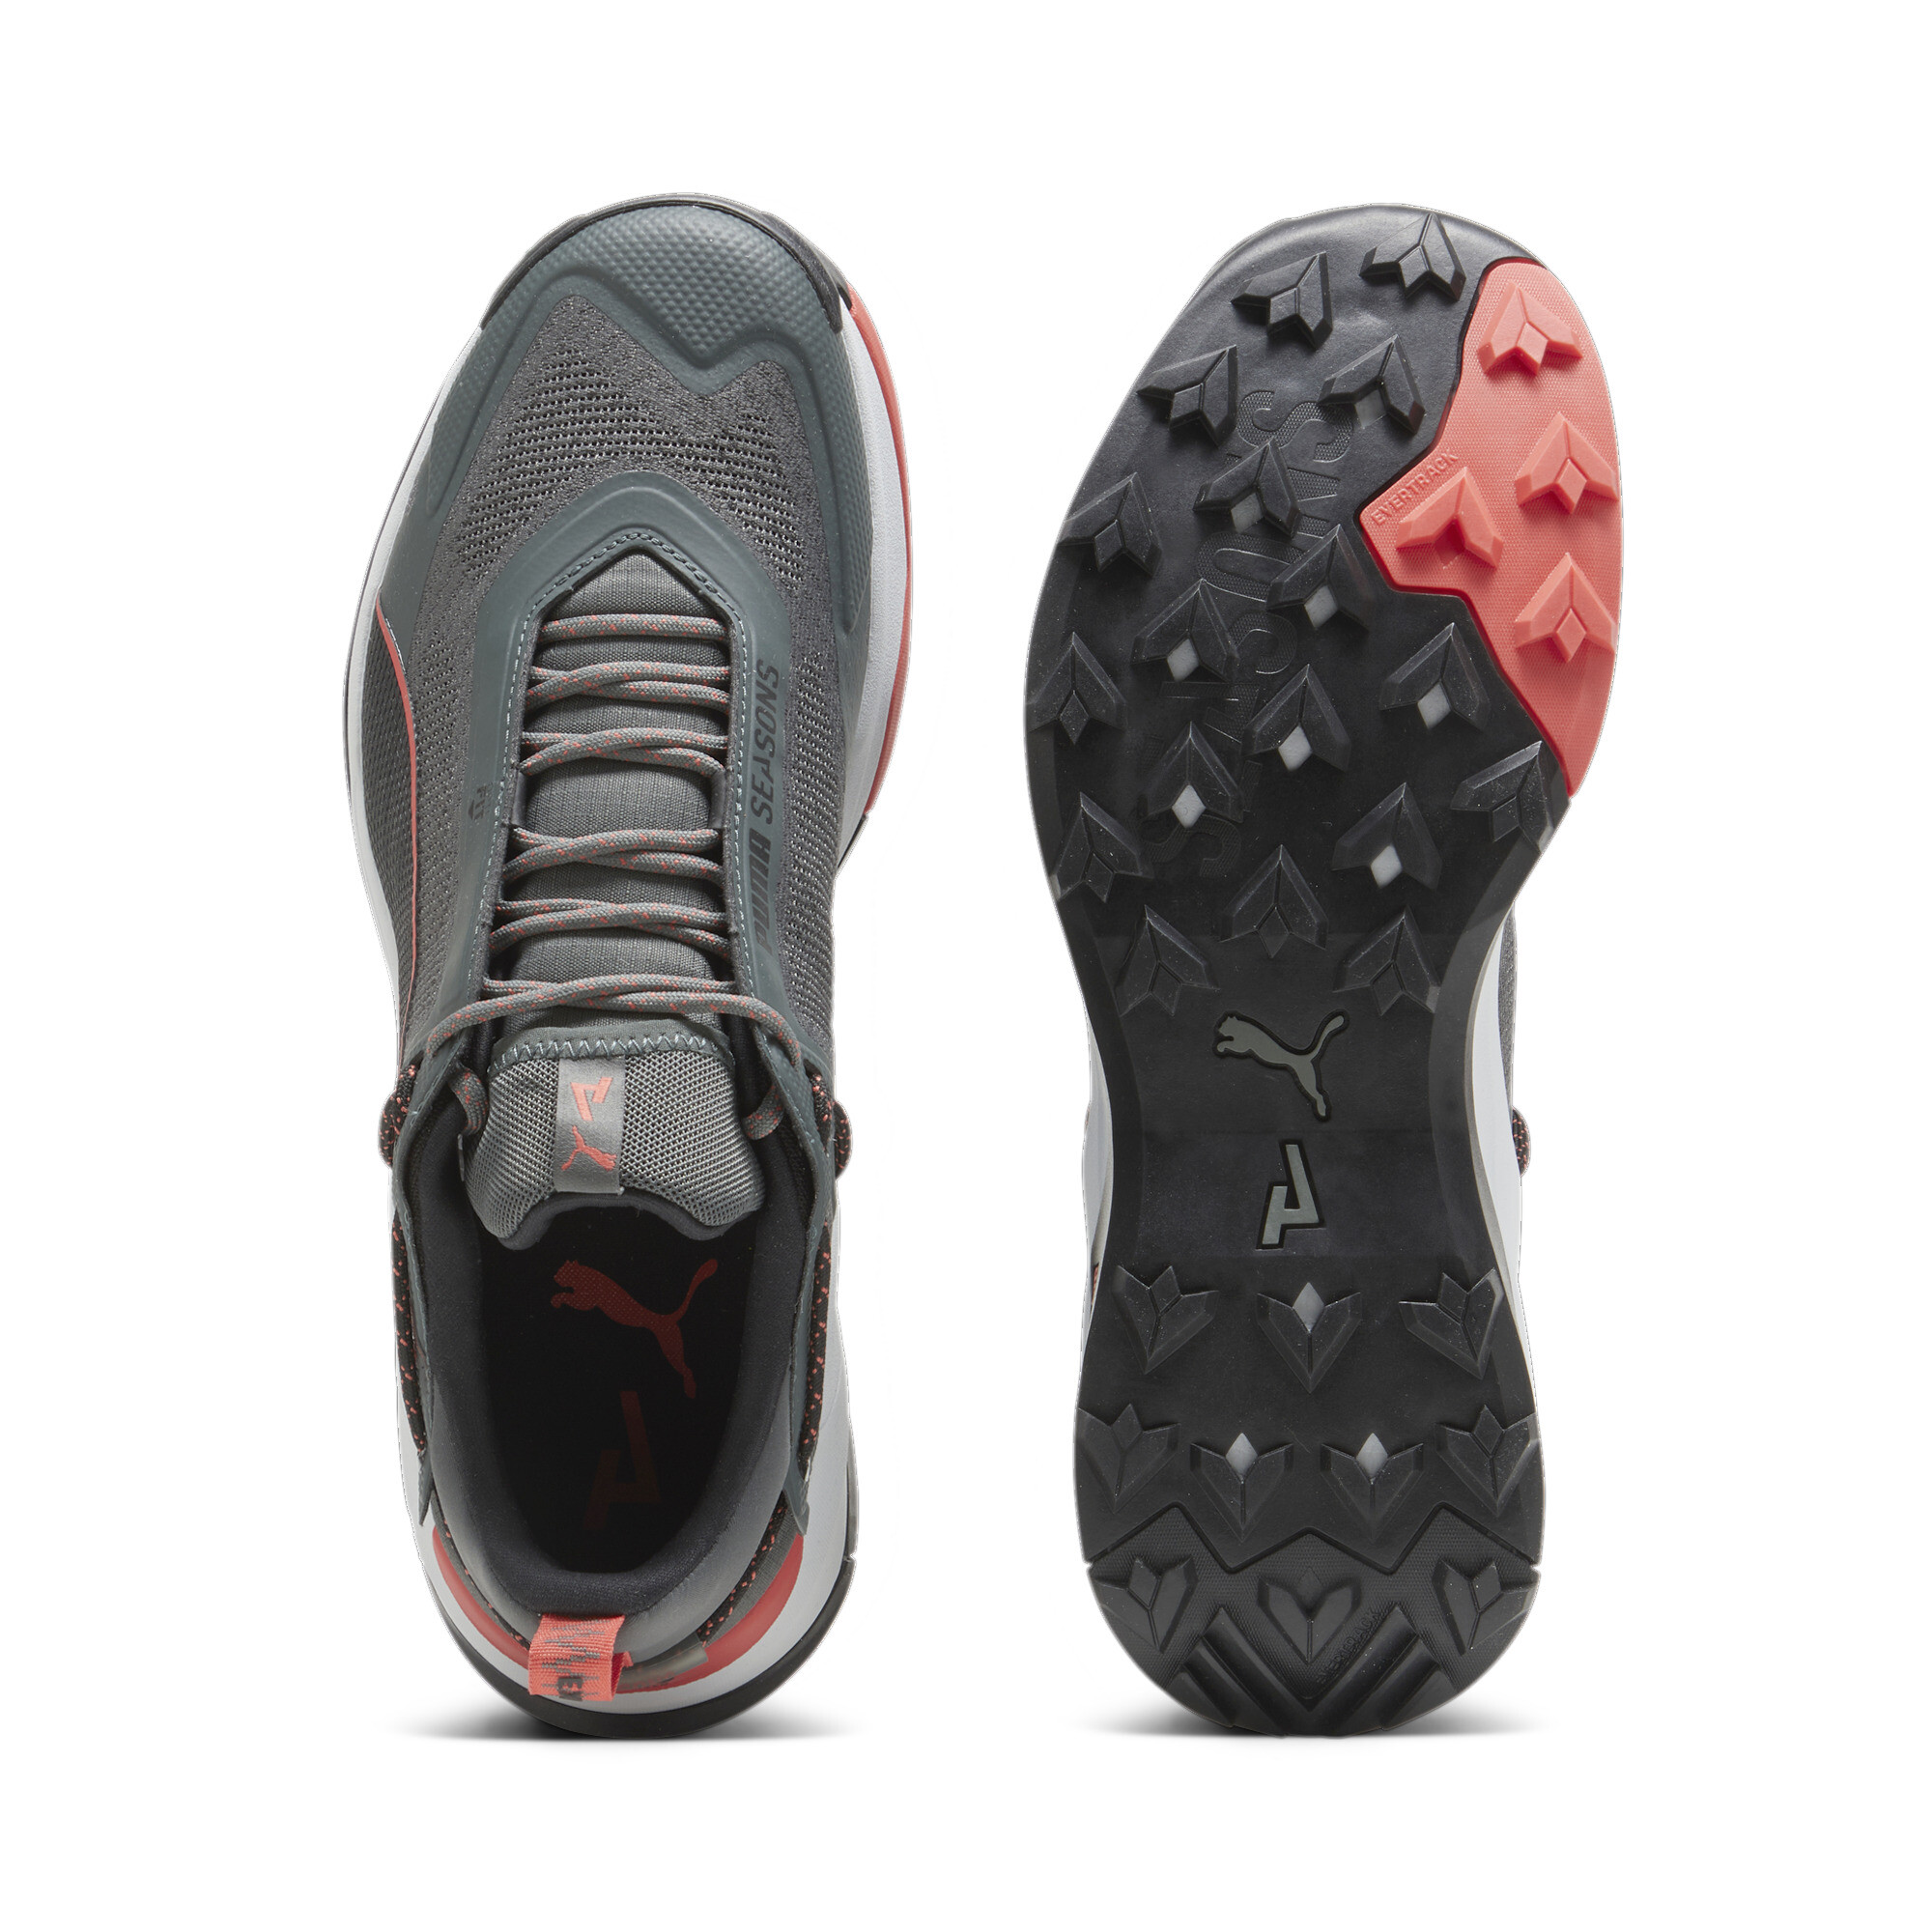 Men's PUMA Explore NITROâ¢ Hiking Shoes In Gray, Size EU 43